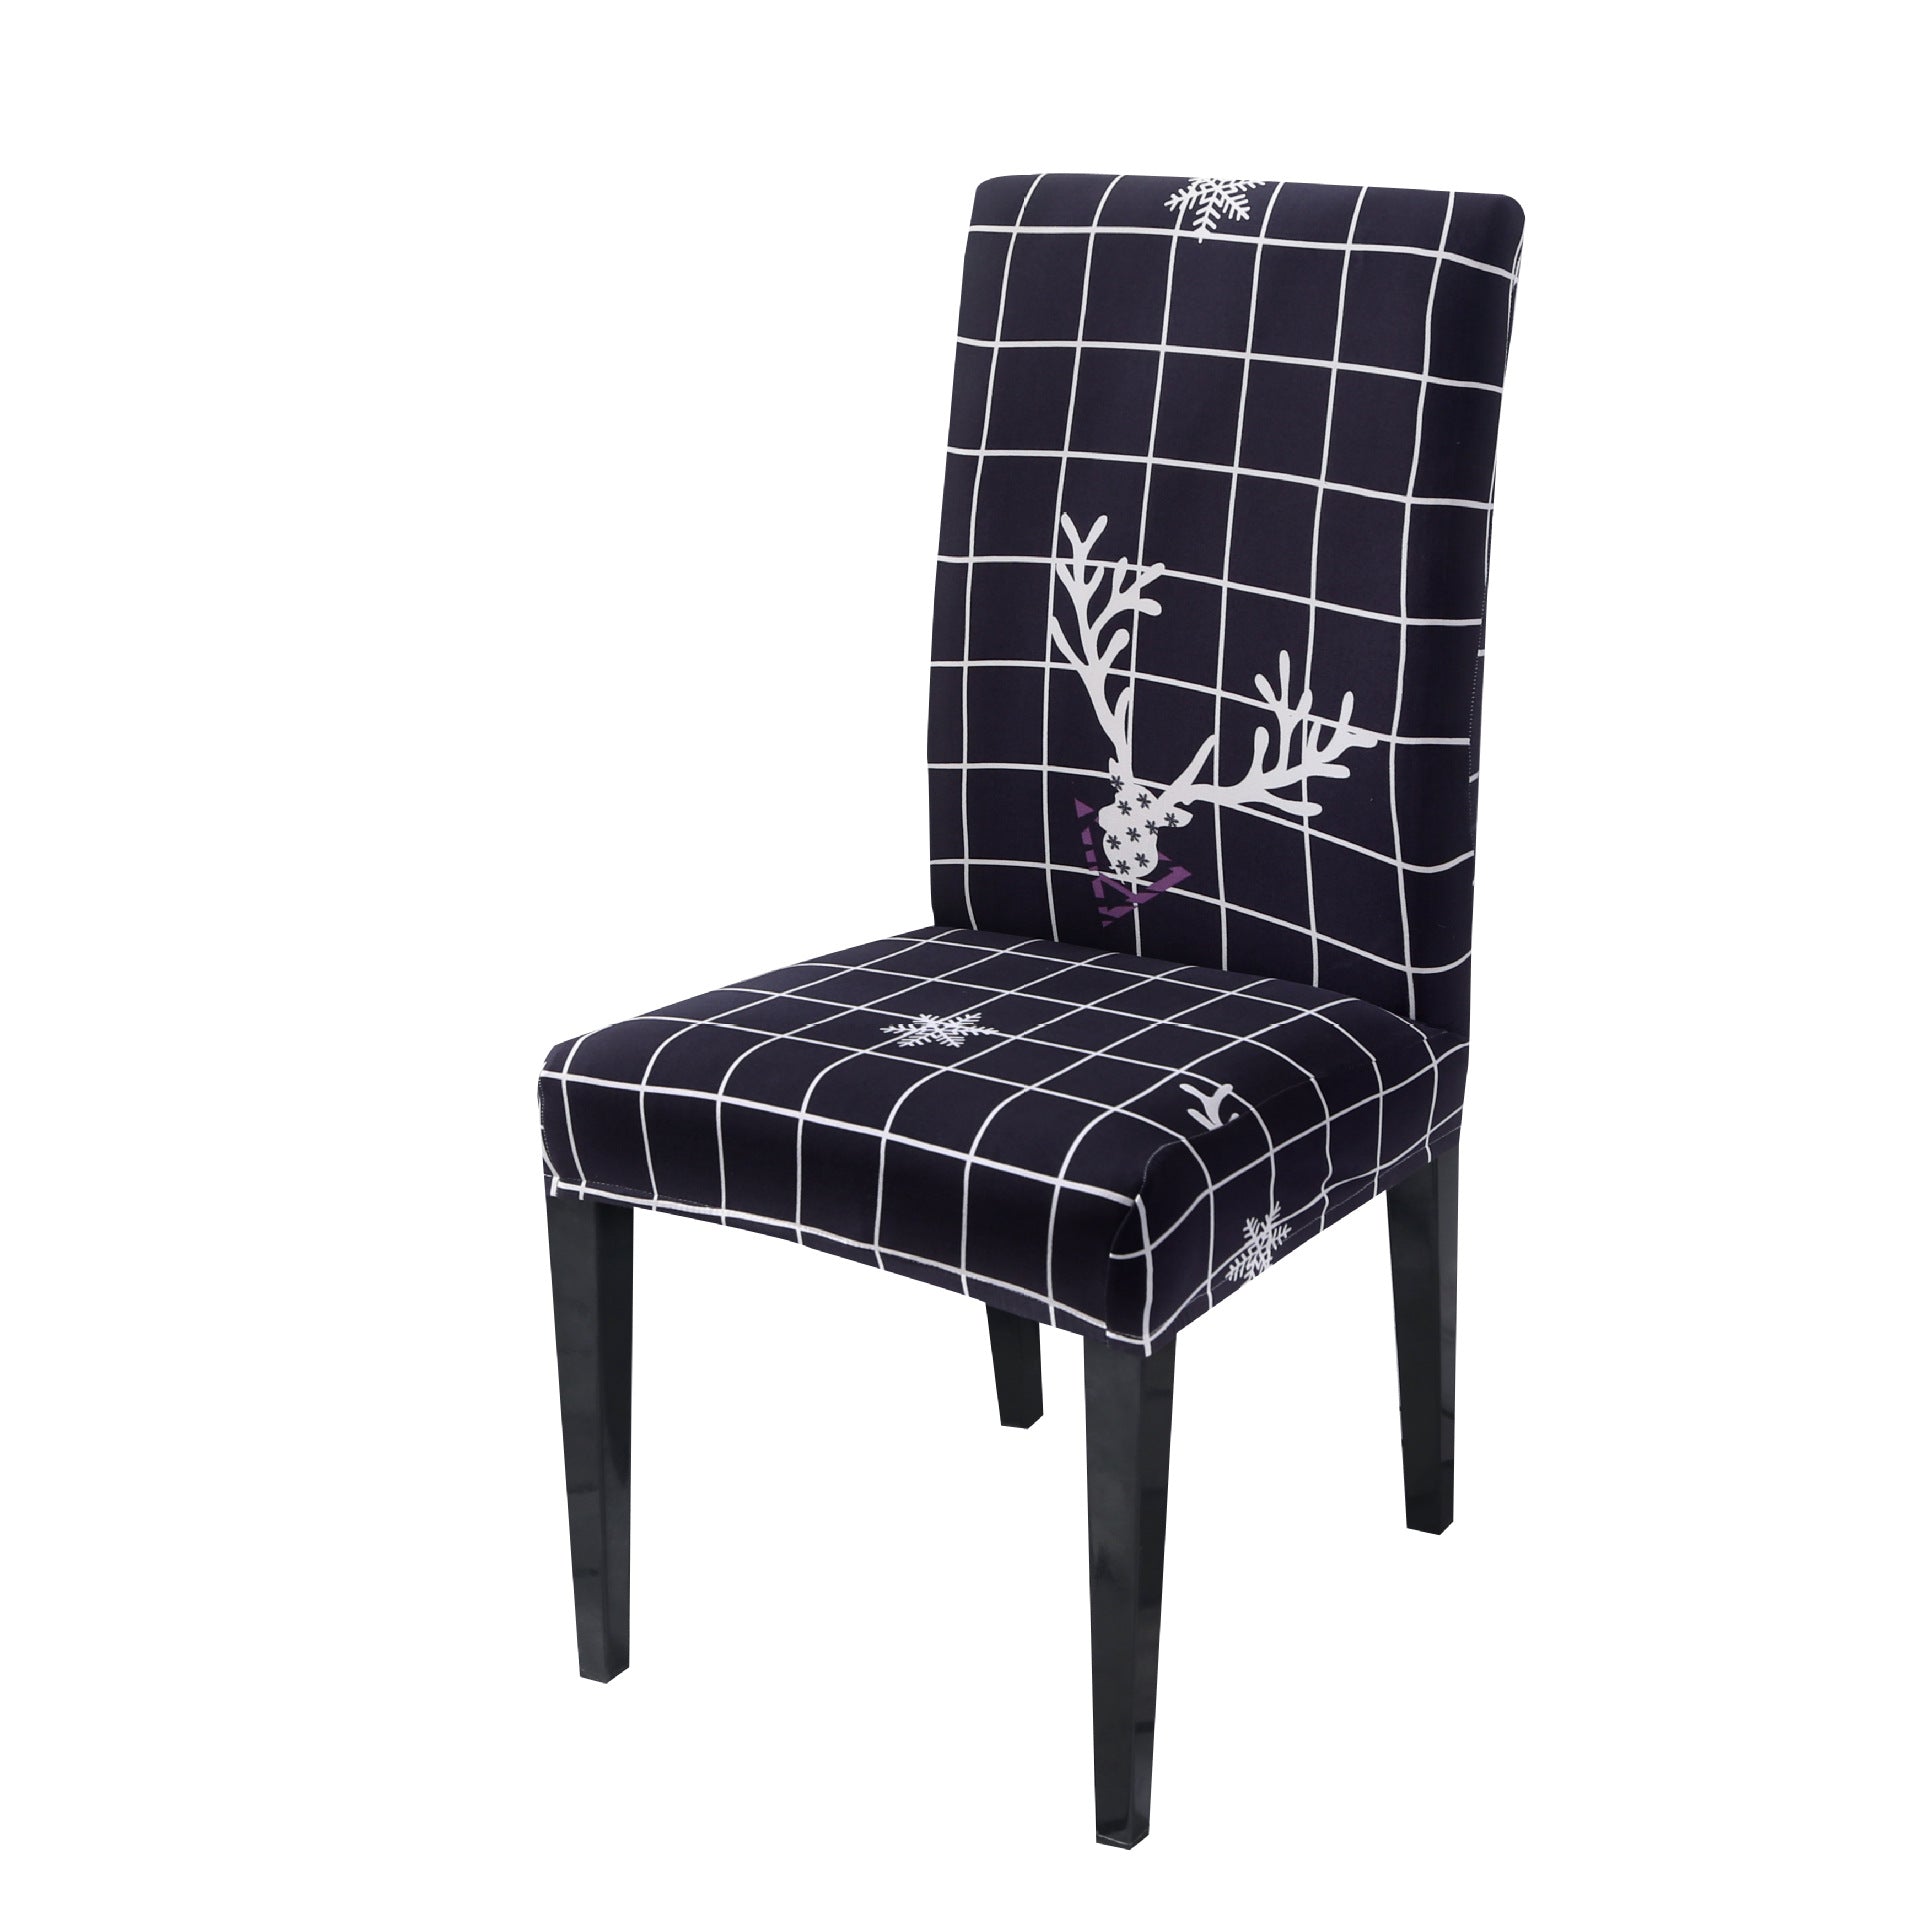 Funda elástica universal para silla navideña.-Christmas universal elastic chair cover